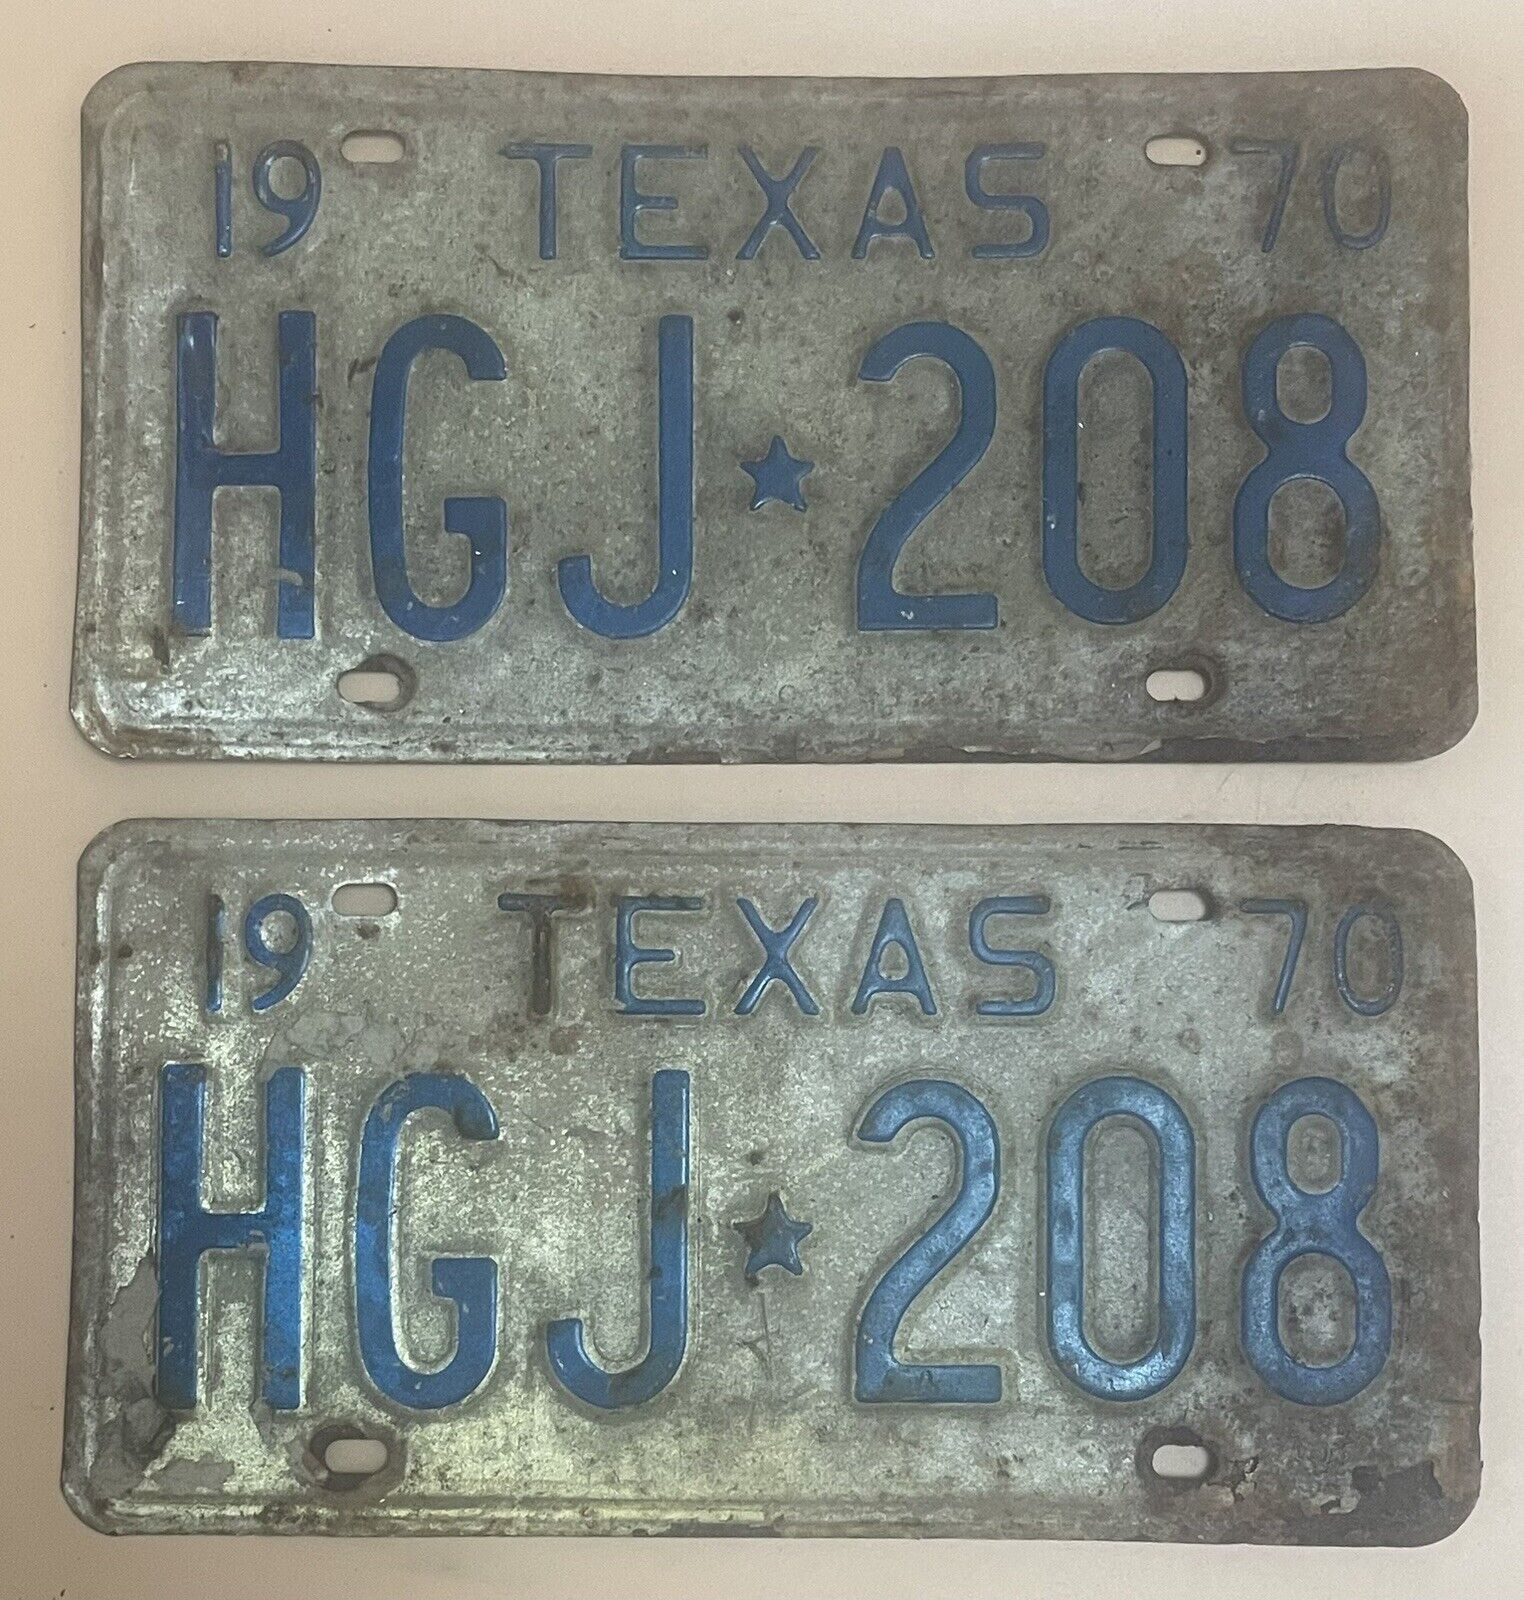 Vintage 1970 Pair Of Texas License Plates HGJ 208